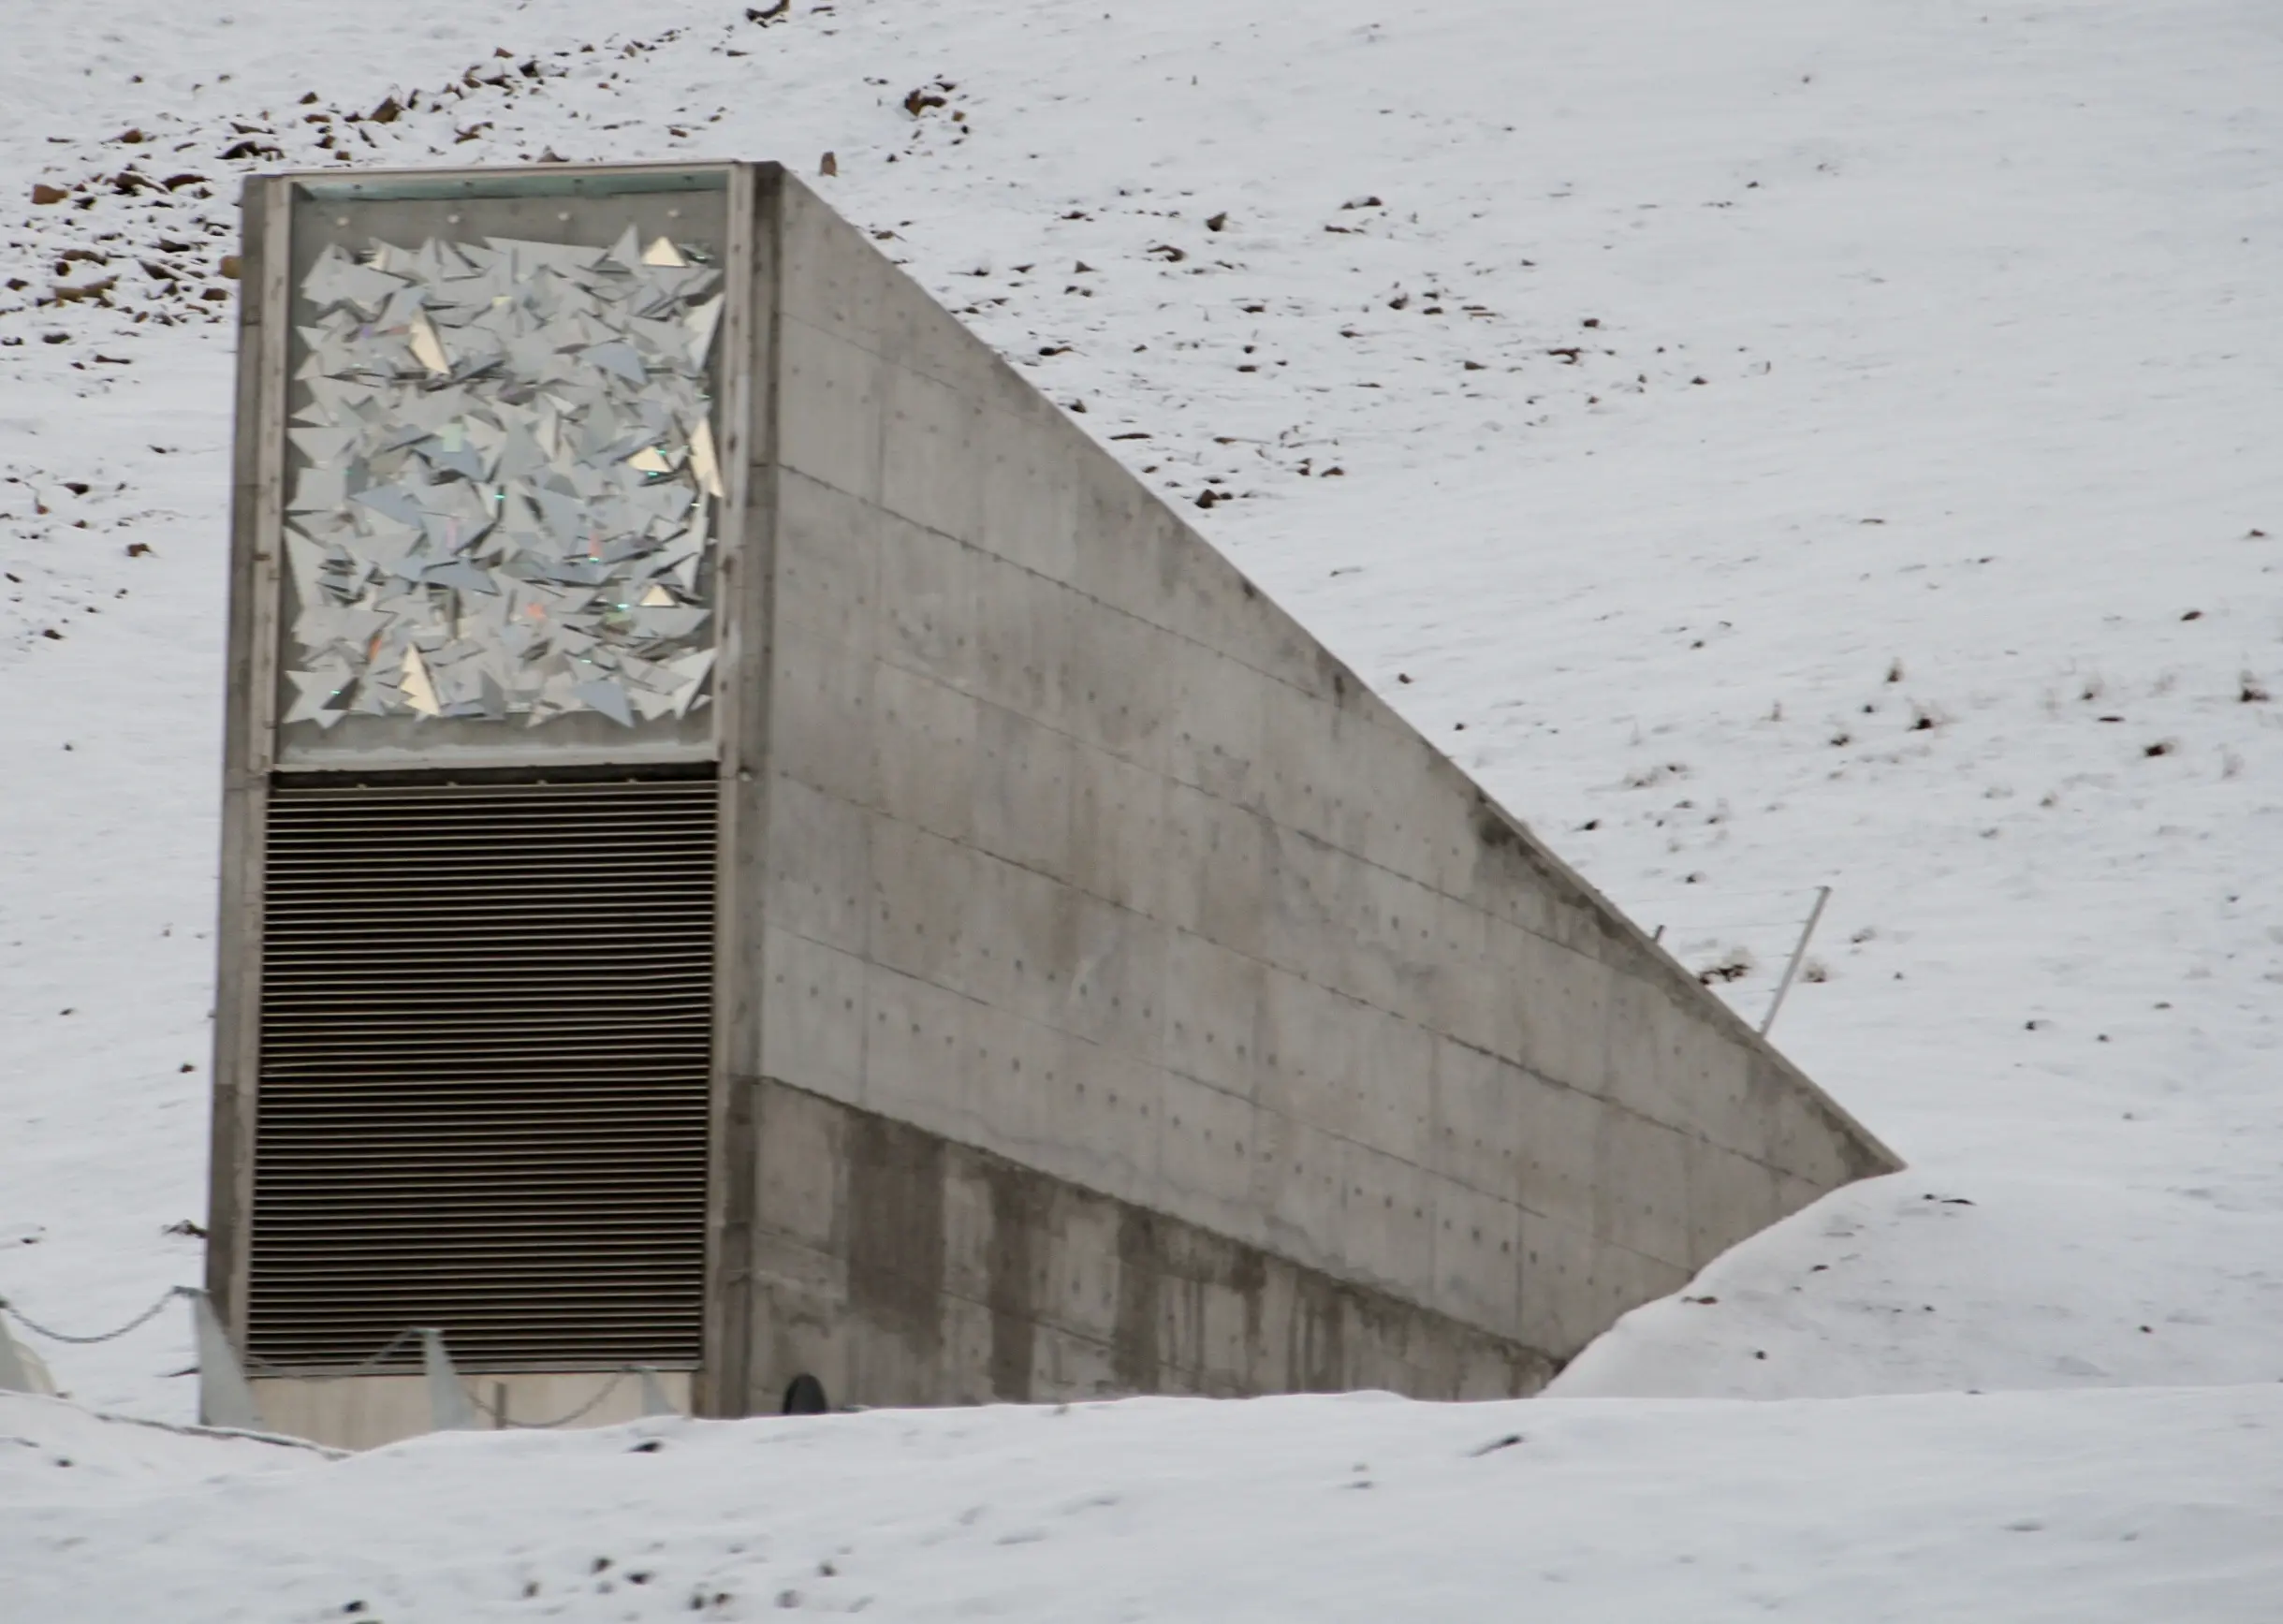 Svalbard Global Seed Vault (Wikimedia Commons)